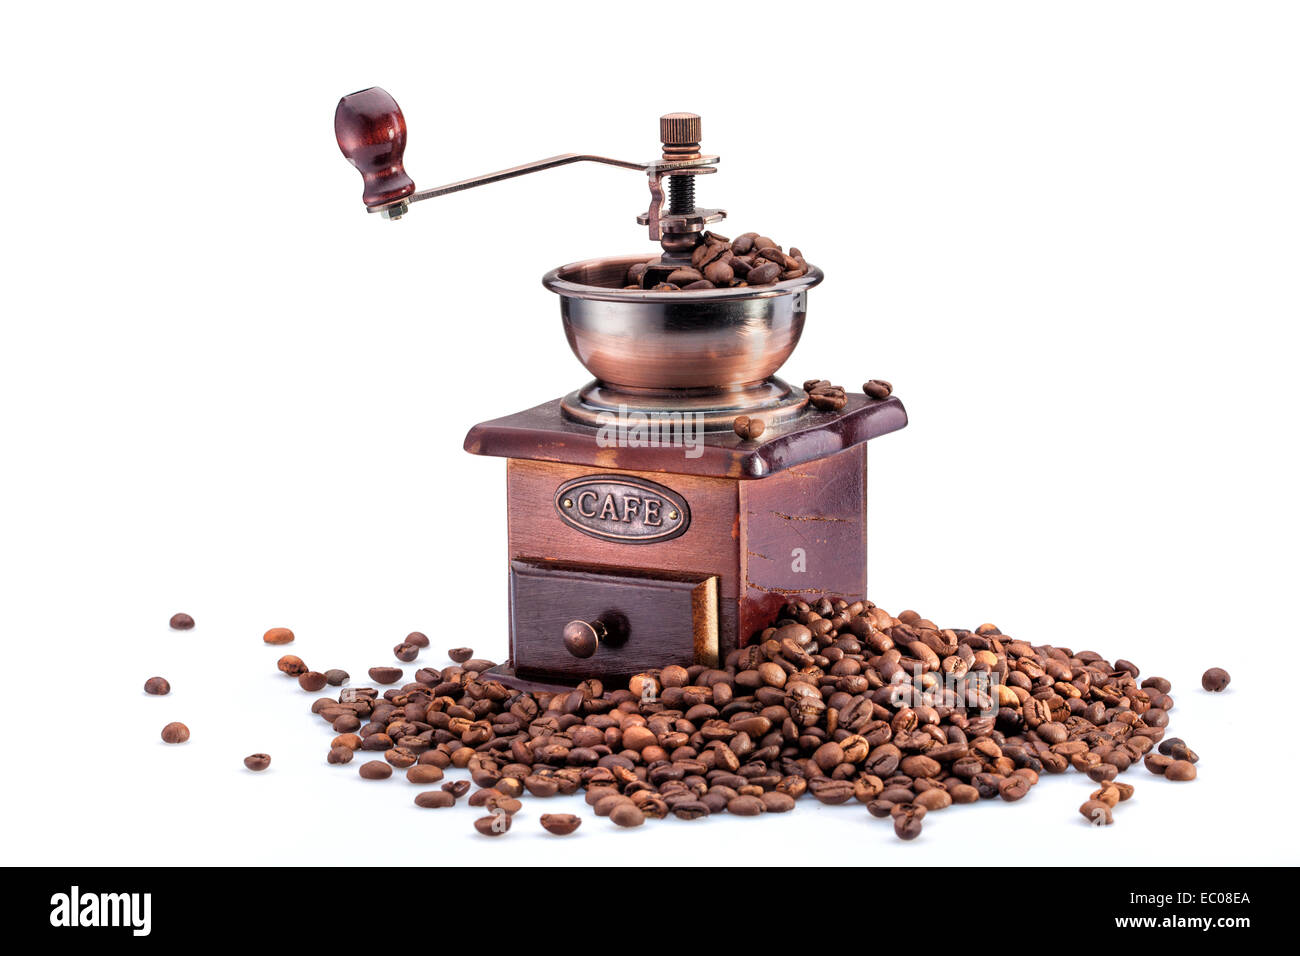 https://c8.alamy.com/comp/EC08EA/retro-manual-coffee-mill-on-roasted-coffee-beans-isolated-EC08EA.jpg